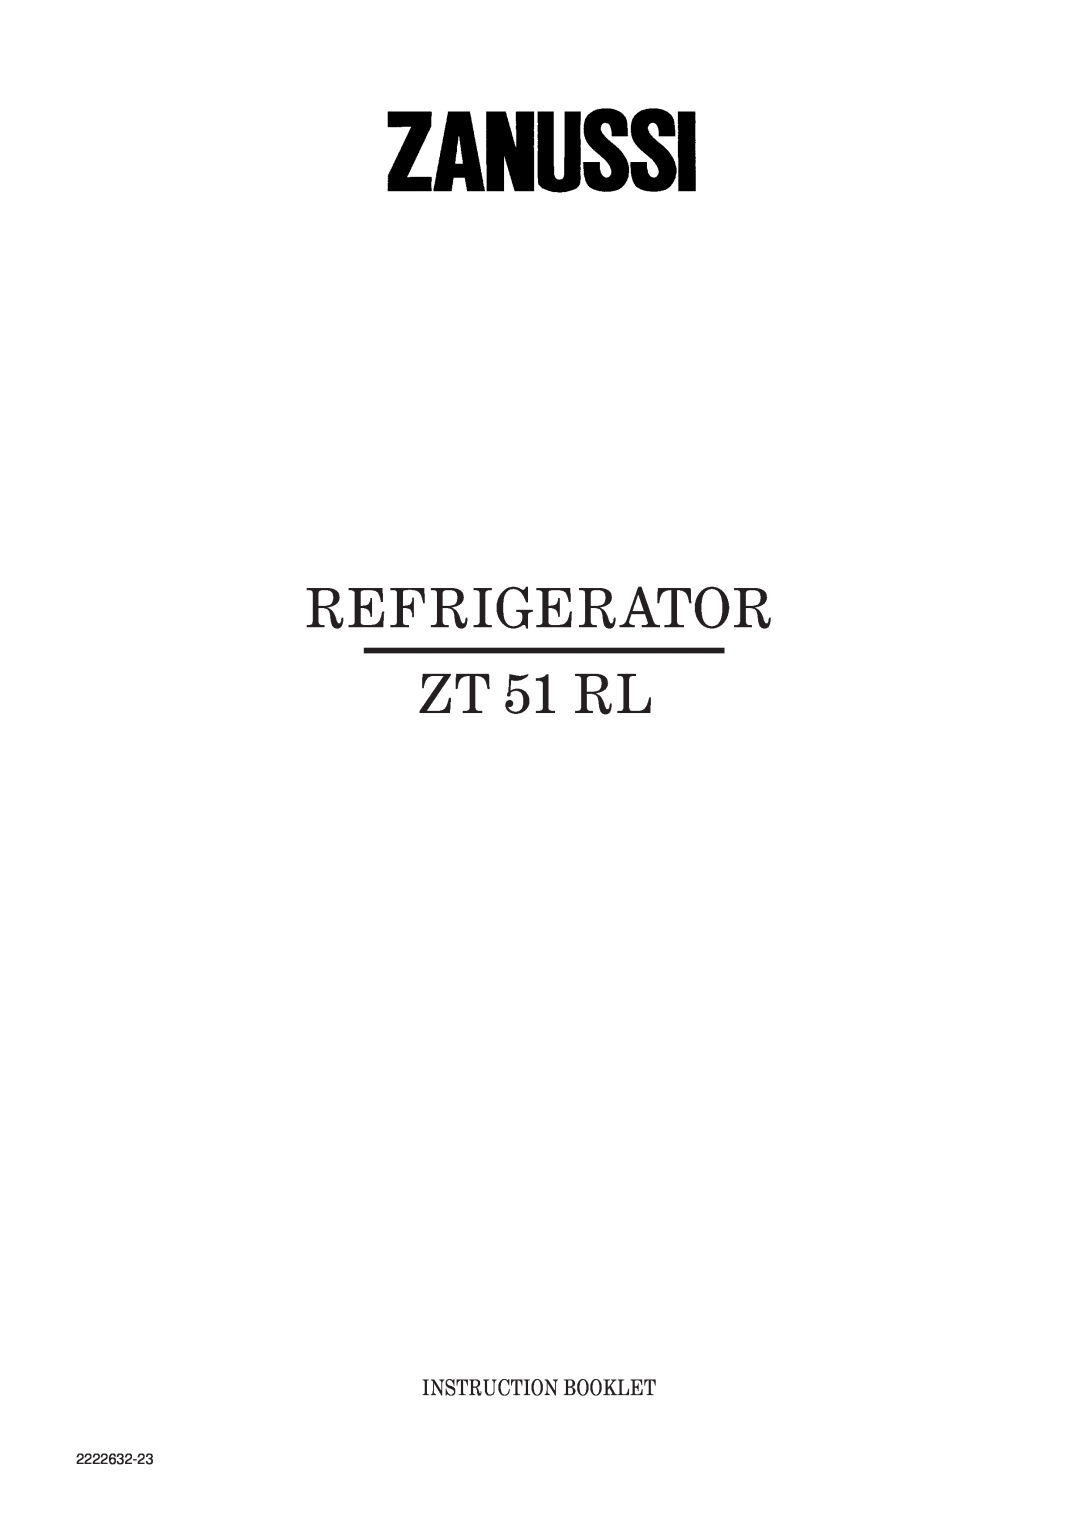 Zanussi ZT 51 RL manual Refrigerator, Instruction Booklet, 2222632-23 